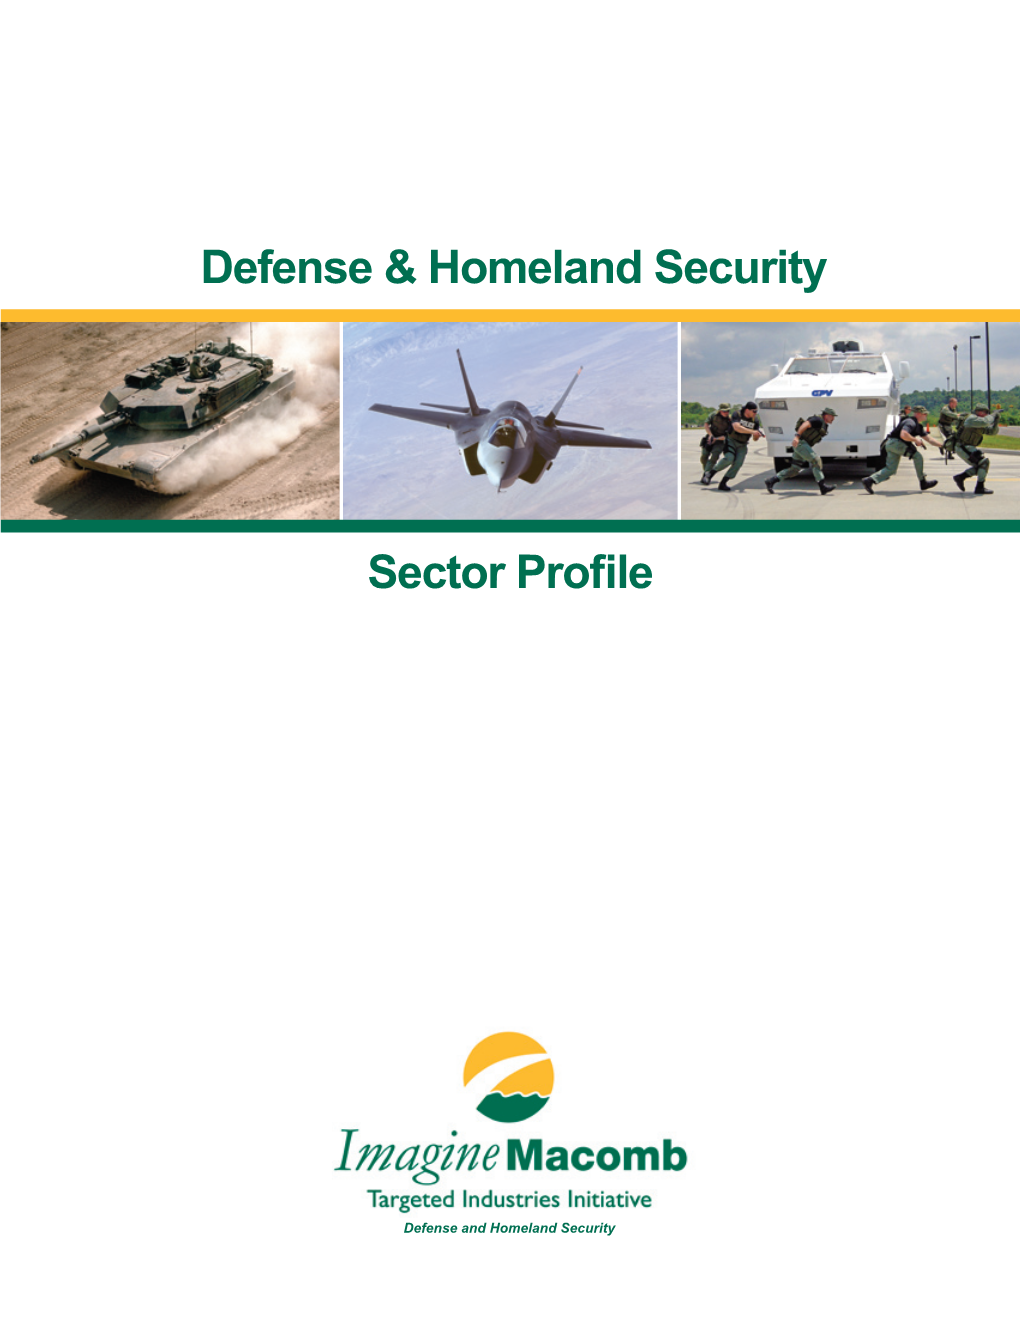 Defense & Homeland Security Sector Profile